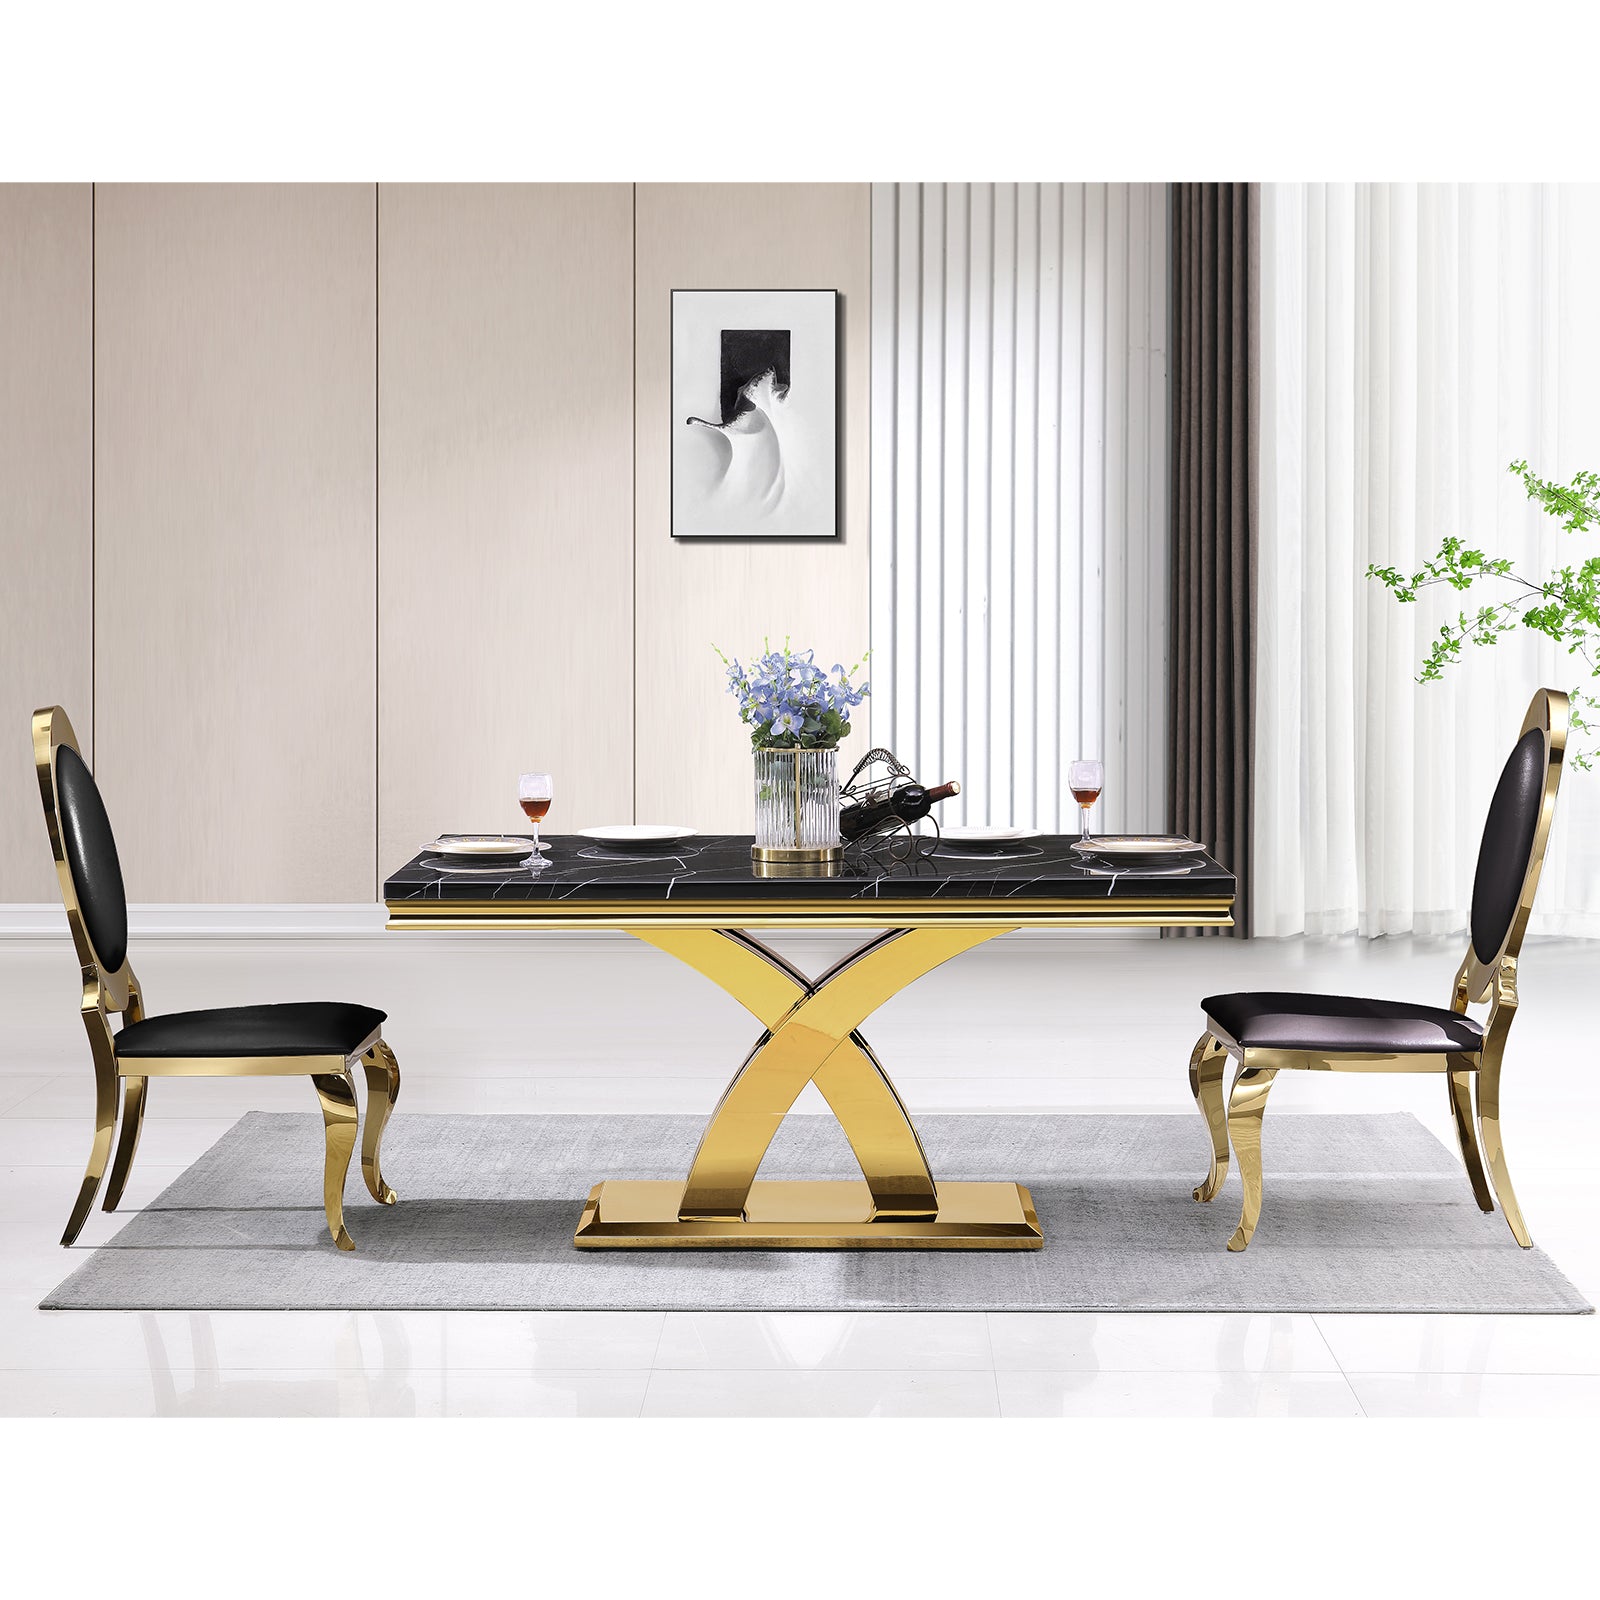 641-Set | AUZ Black and Gold Dining room Sets for 6